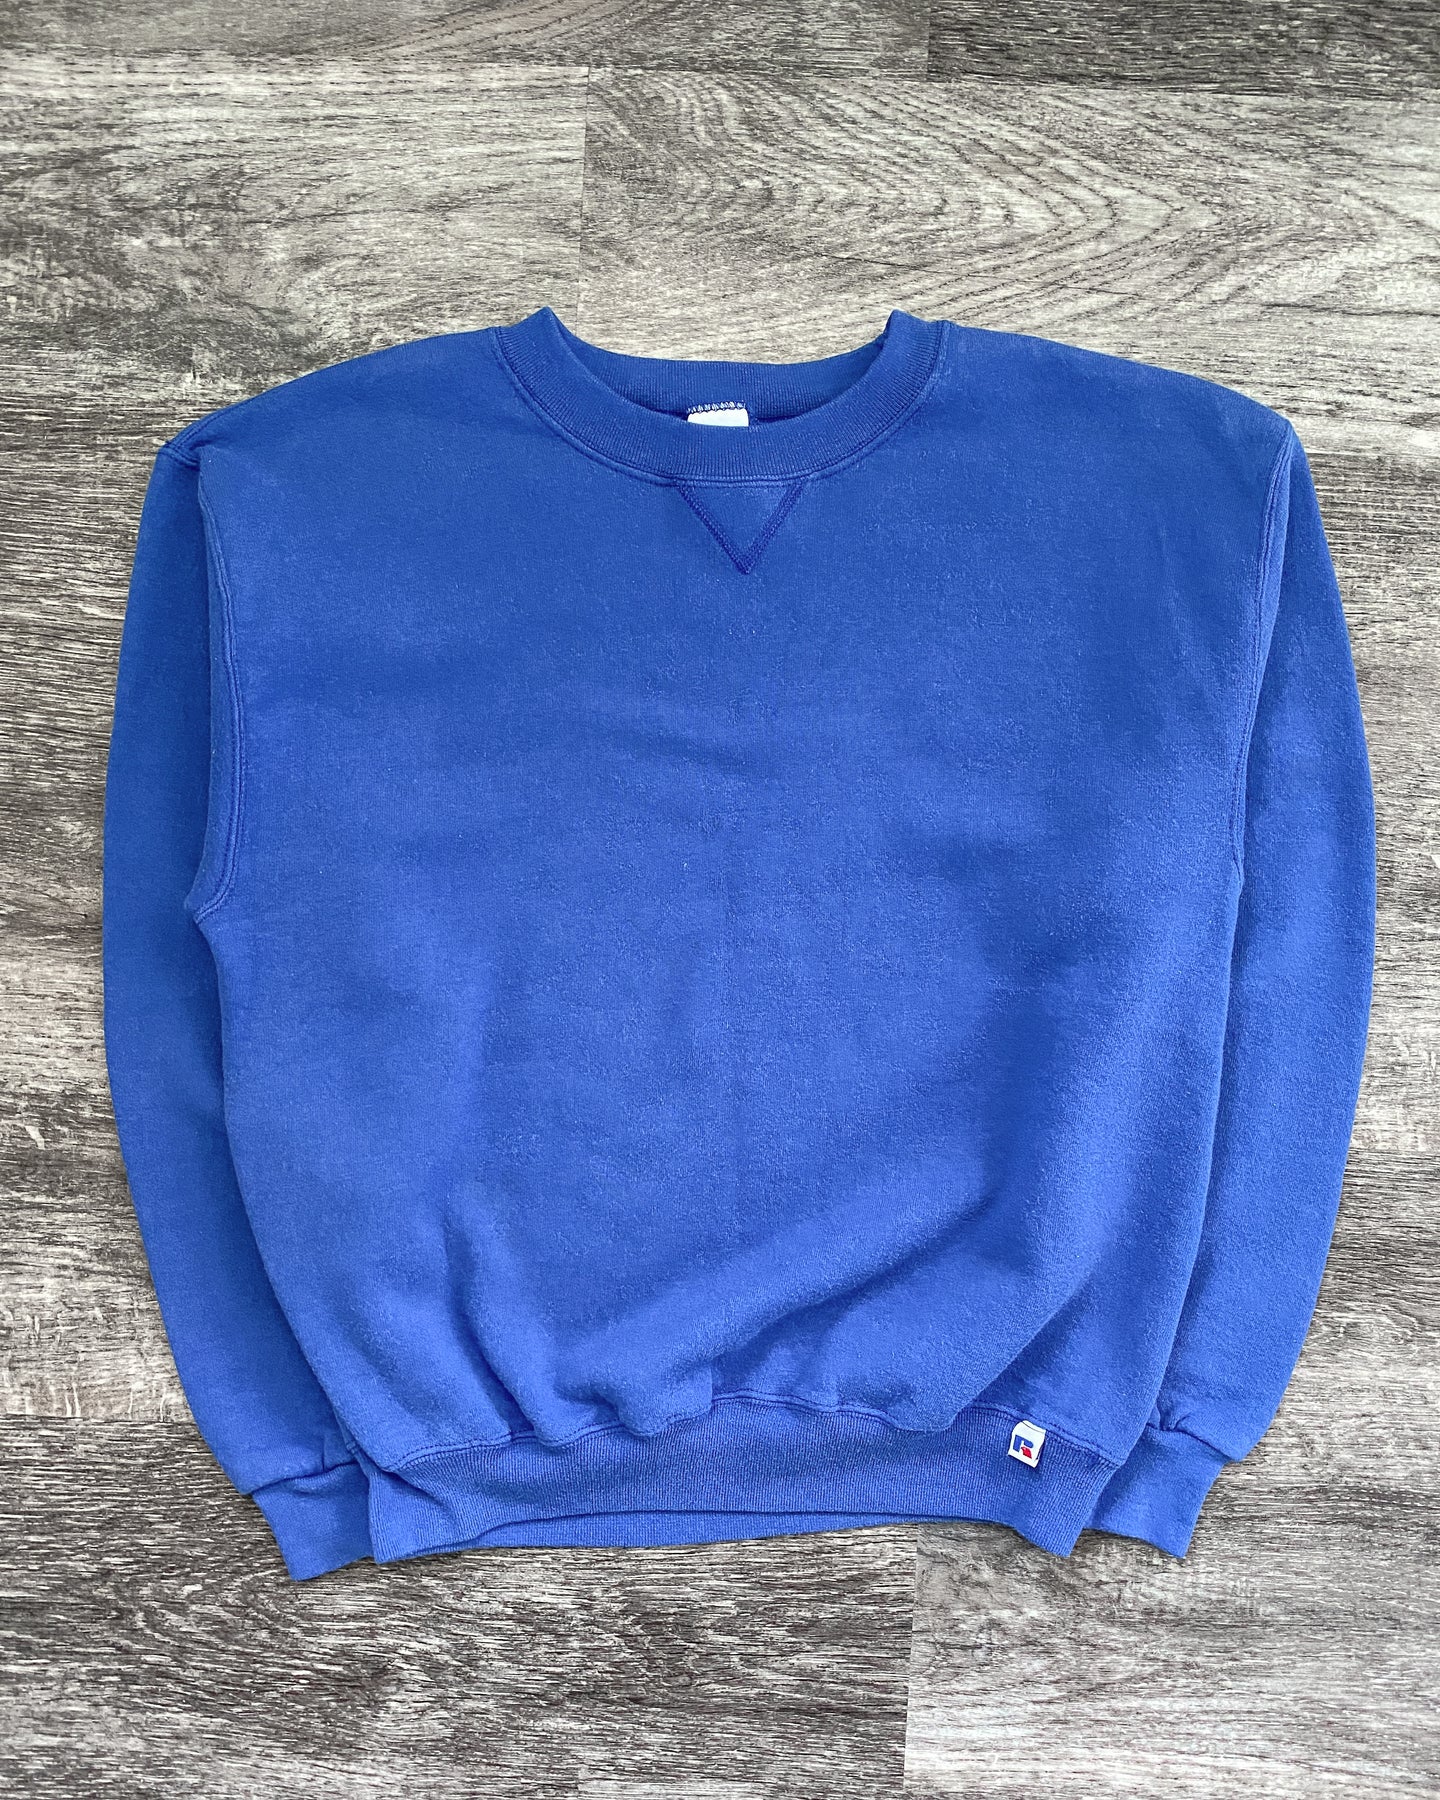 1990s Russell Athletic Royal Blue Crewneck Sweatshirt - Size Medium